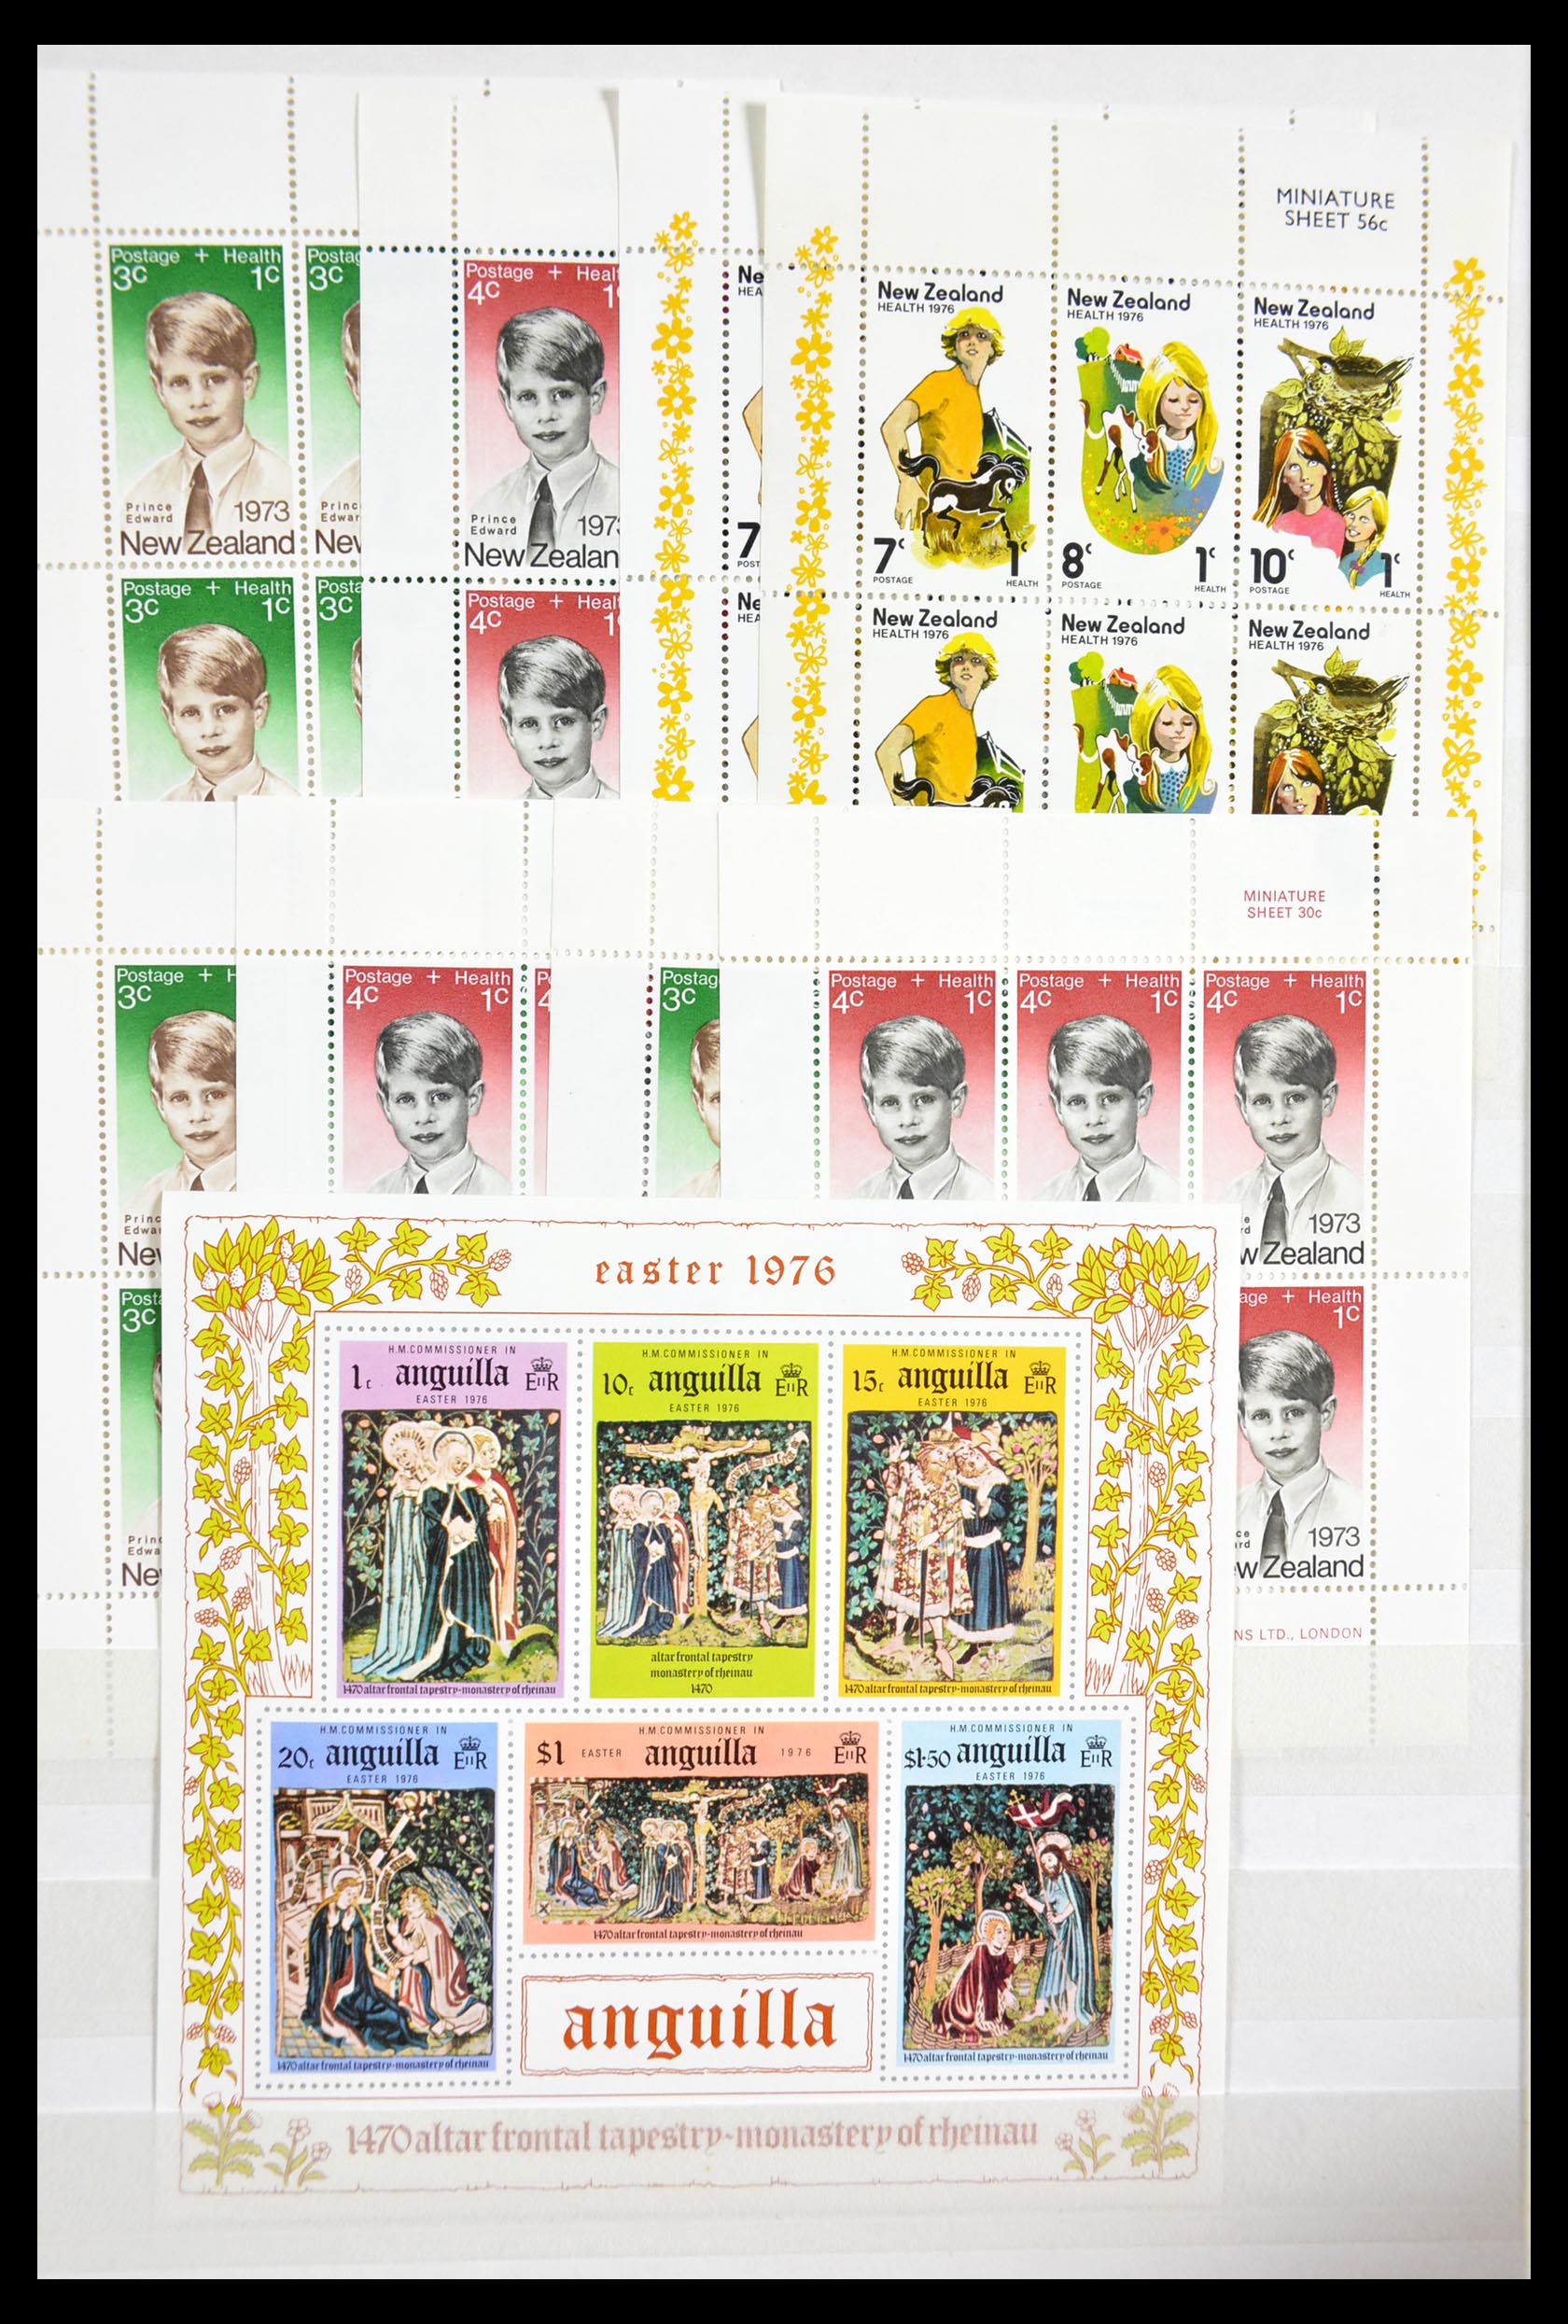 29584 079 - 29584 World souvenir sheets 1980-2011.